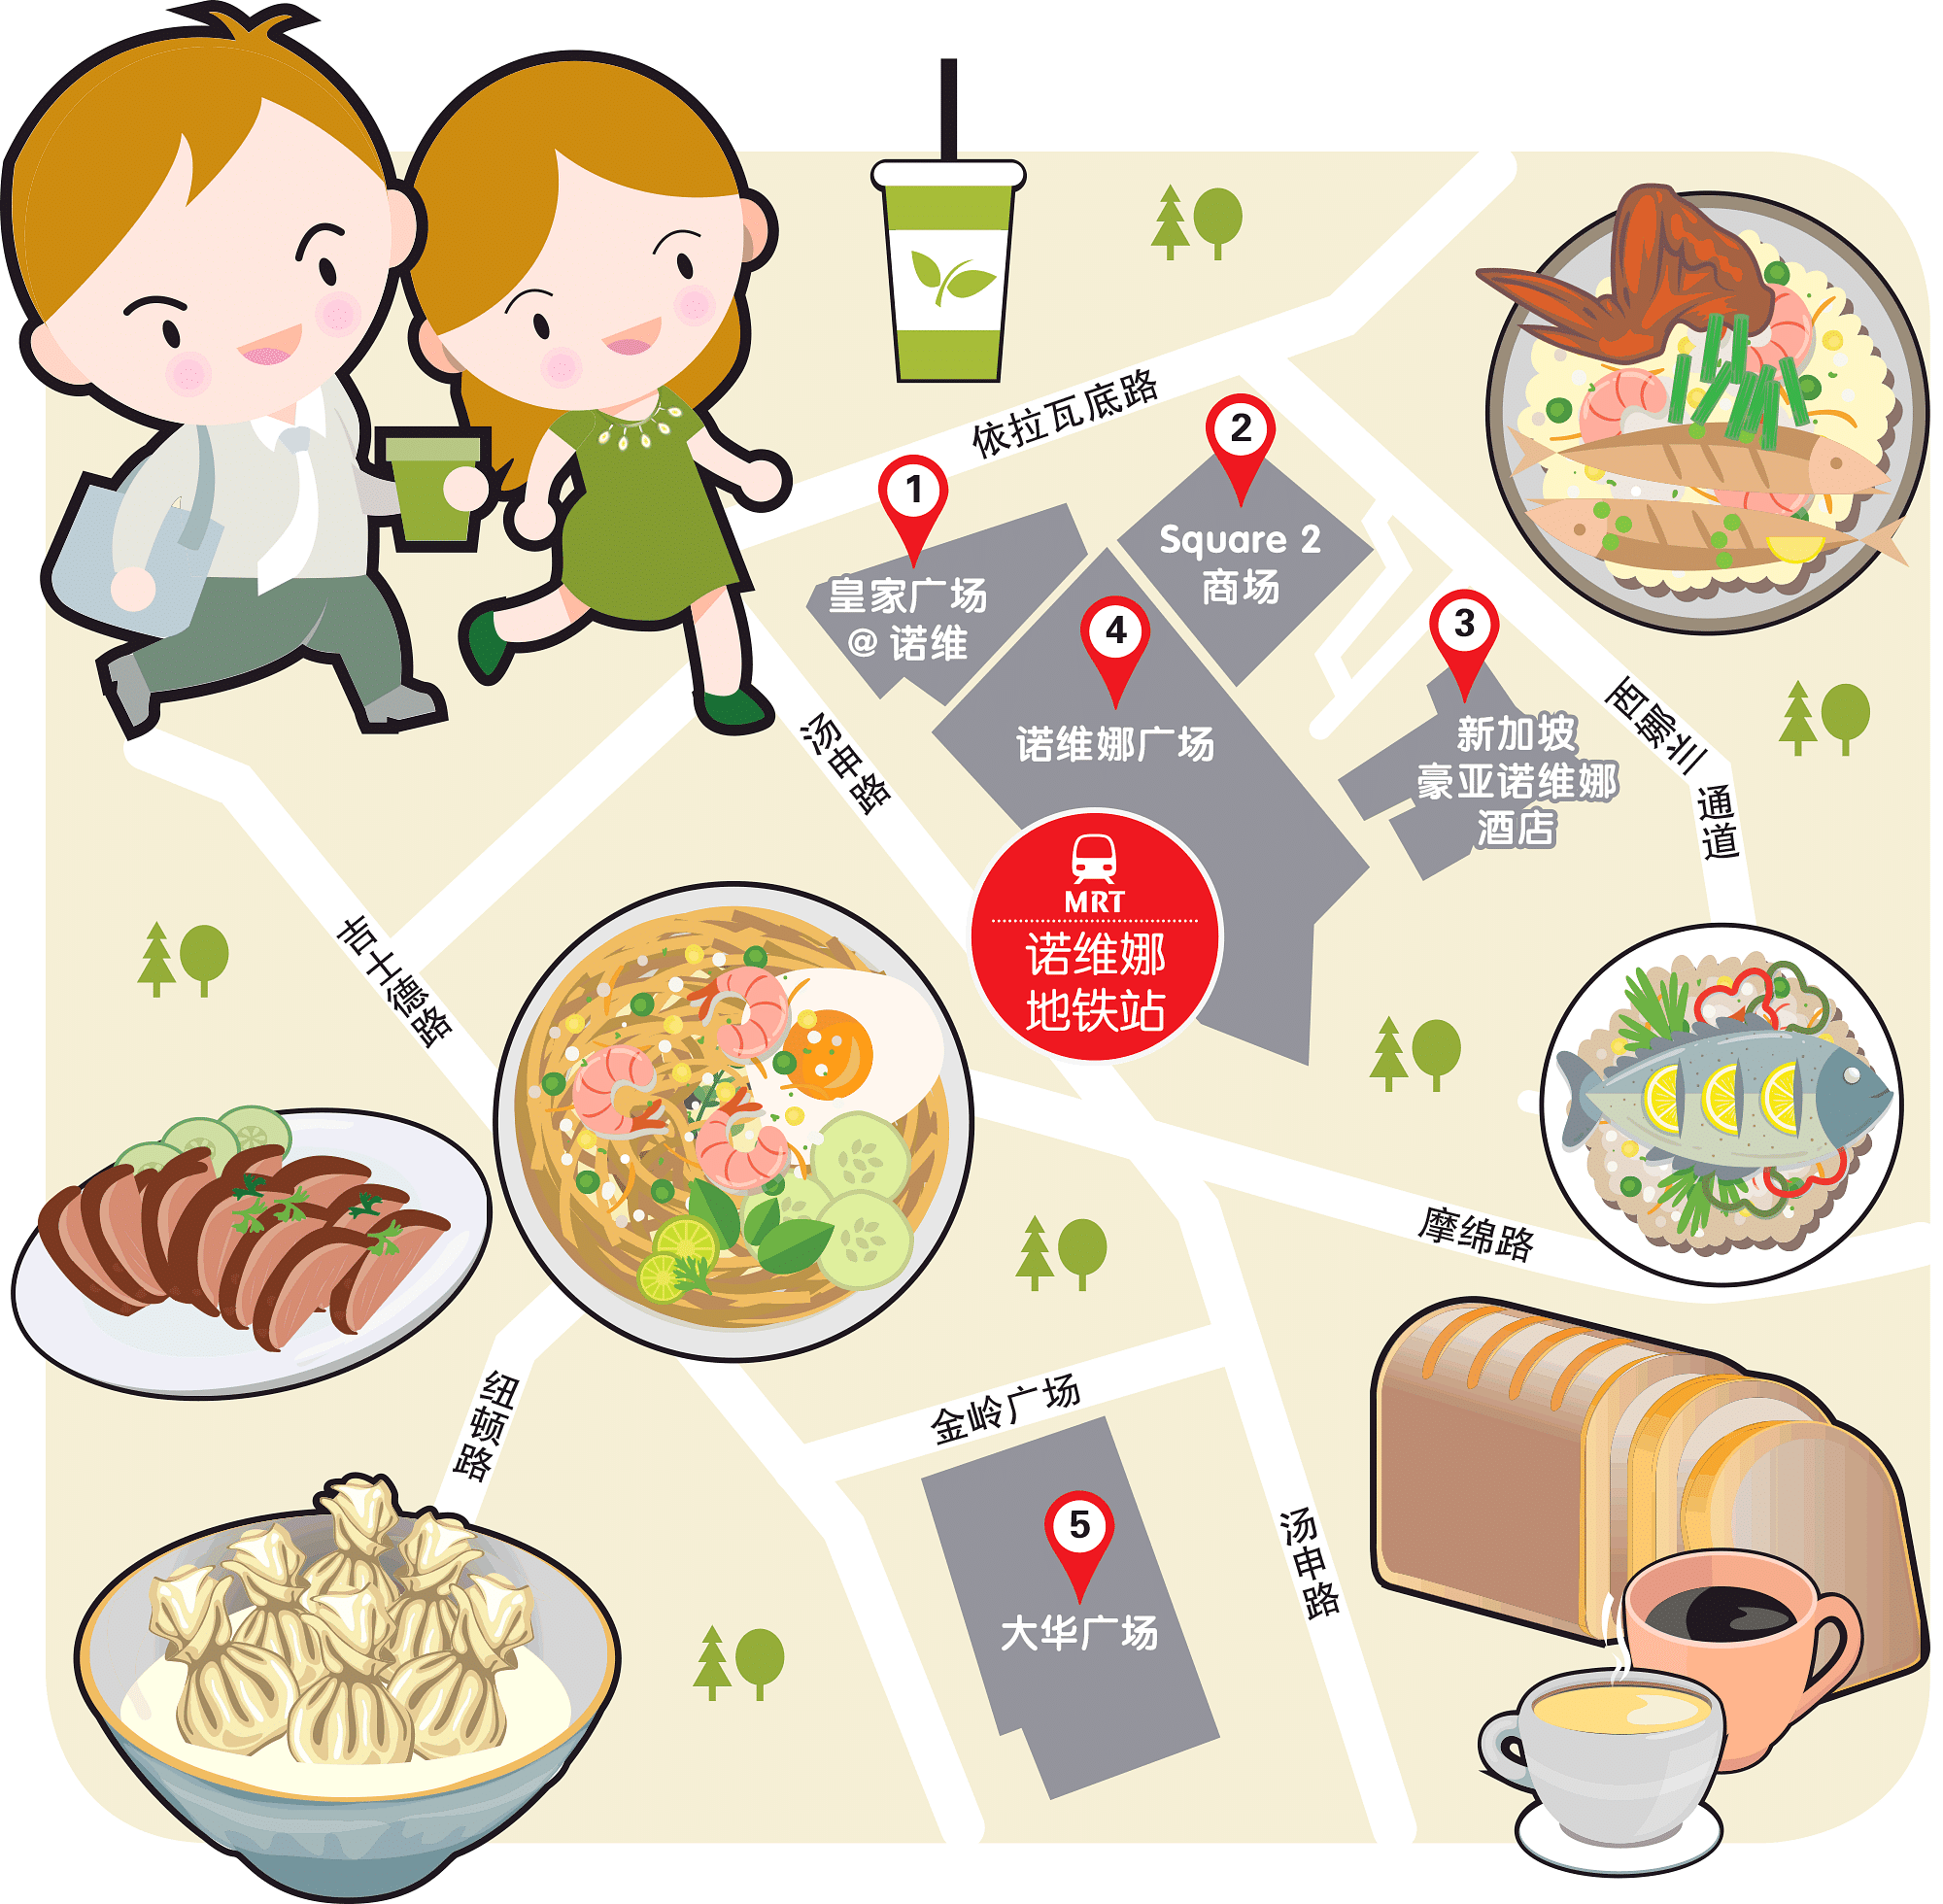 20190409-wanbao-food-search-novena-mrt-cover.png